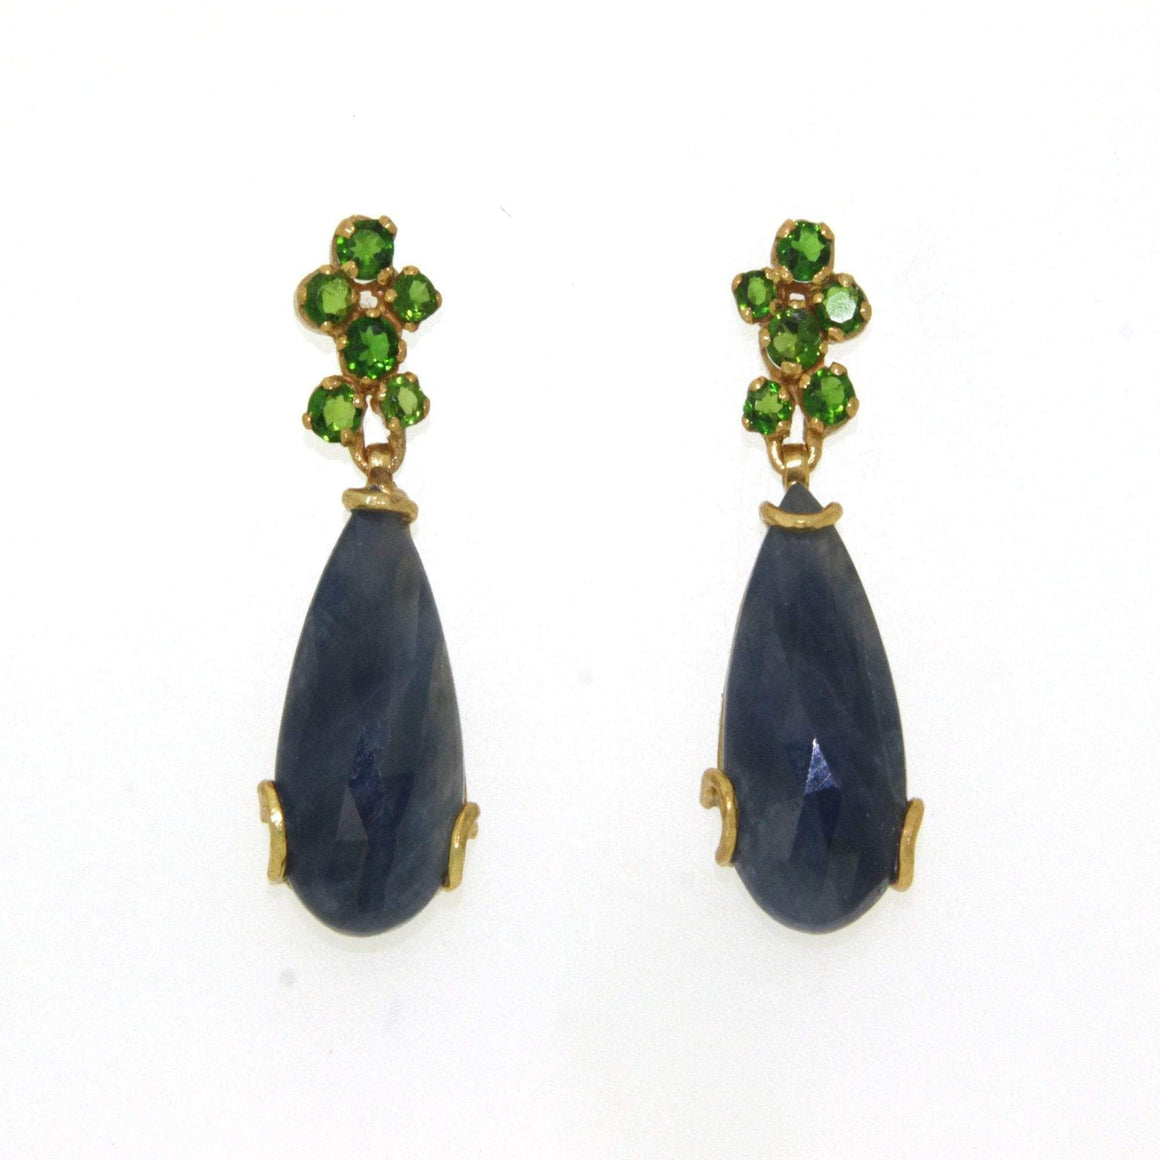 Manjusha Jewels earrings Peacock Earrings in Blue Sapphire and Green Tourmaline